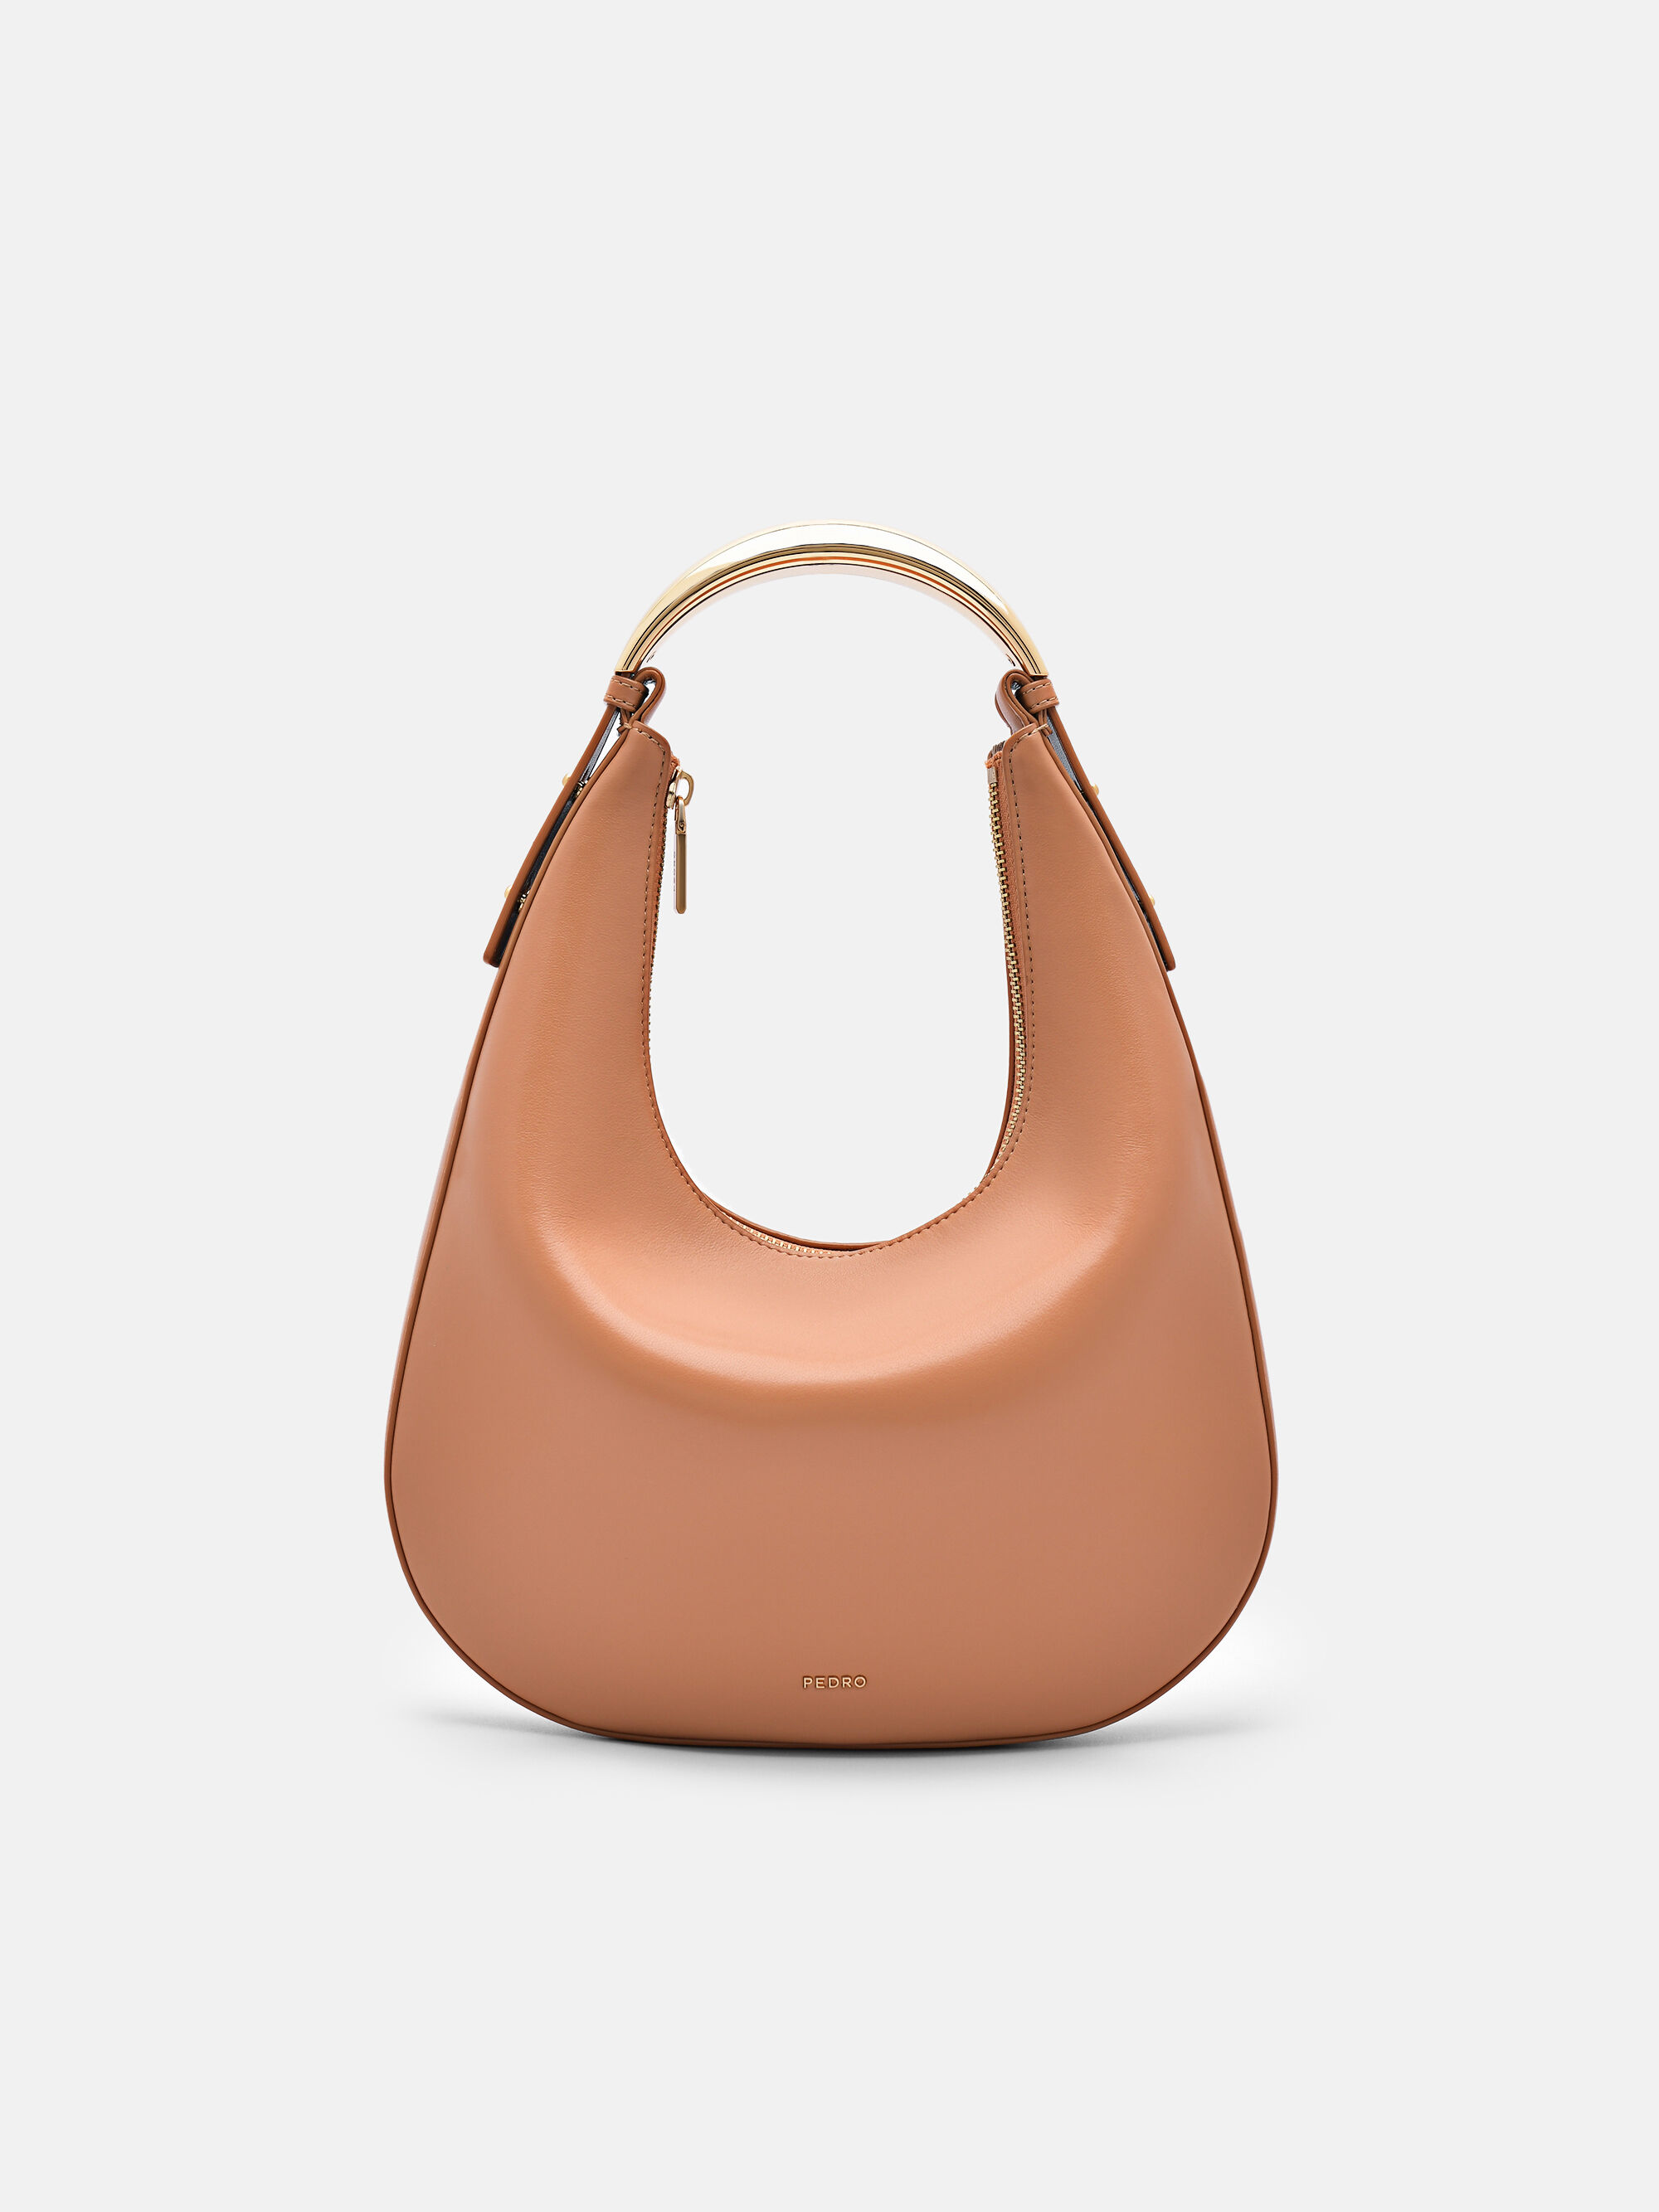 The psychology of carrying a designer bag | Elle Canada